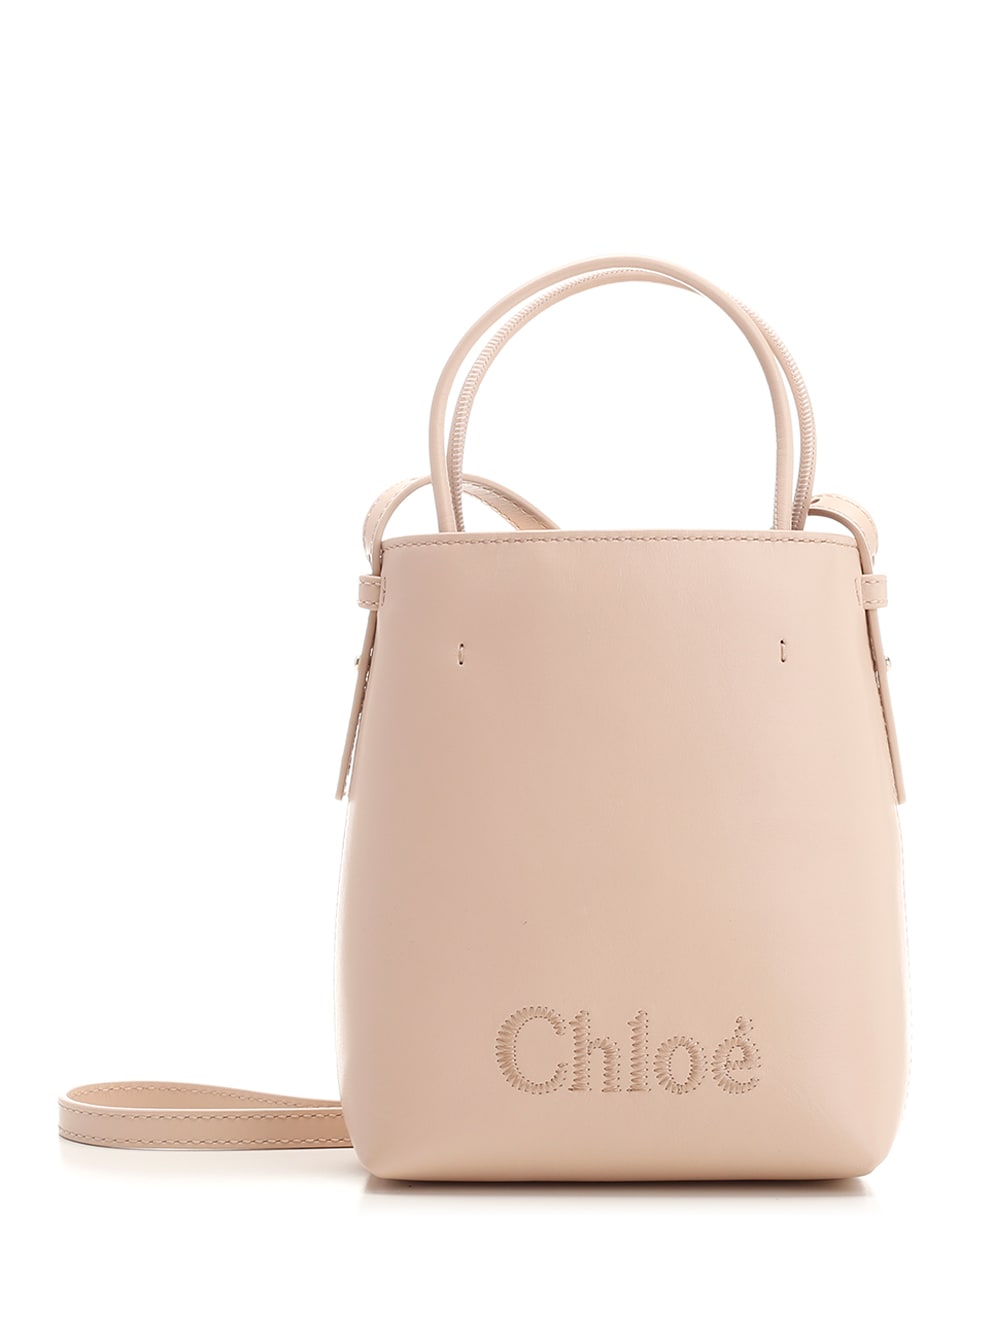 Chloé sense Handbag